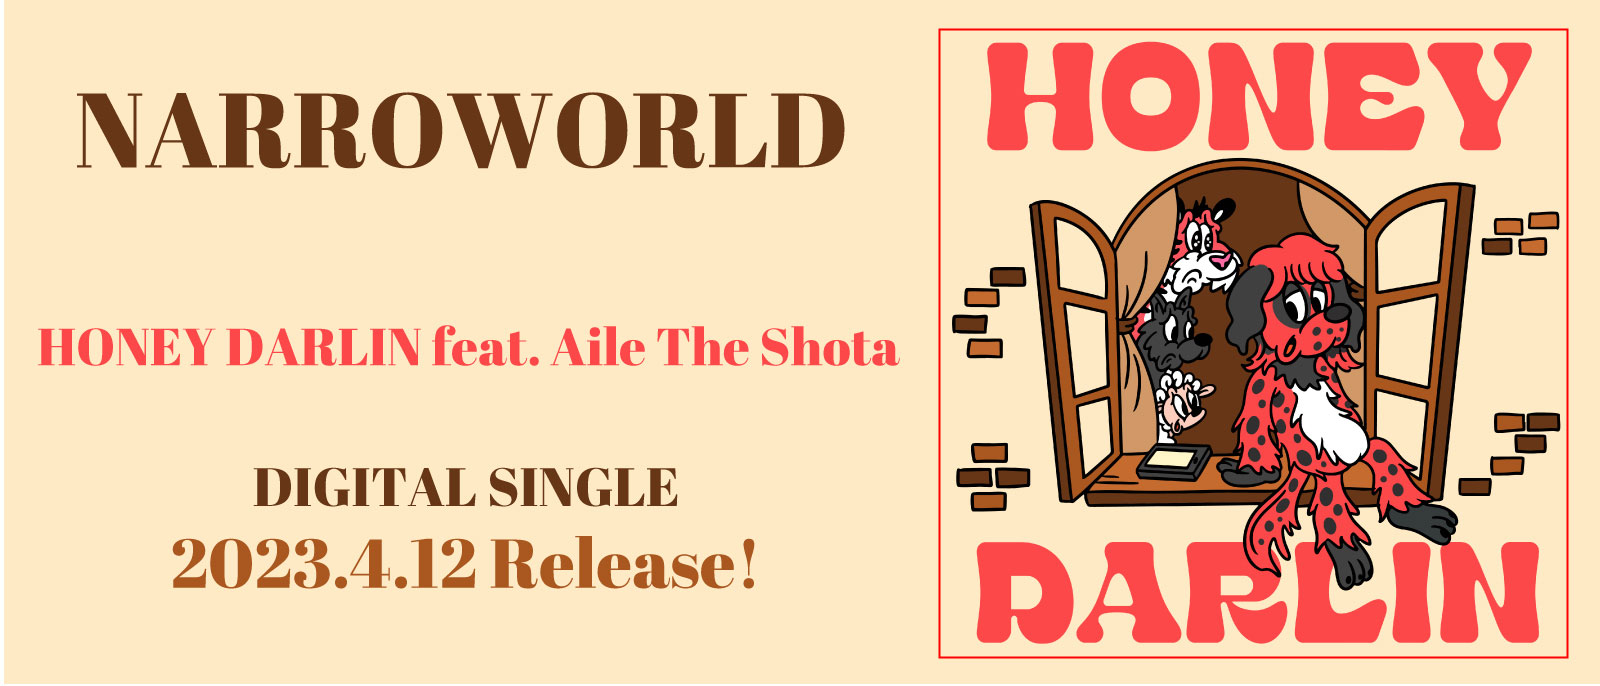 NARROWORLD 『HONEY DARLIN feat. Aile The Shota』